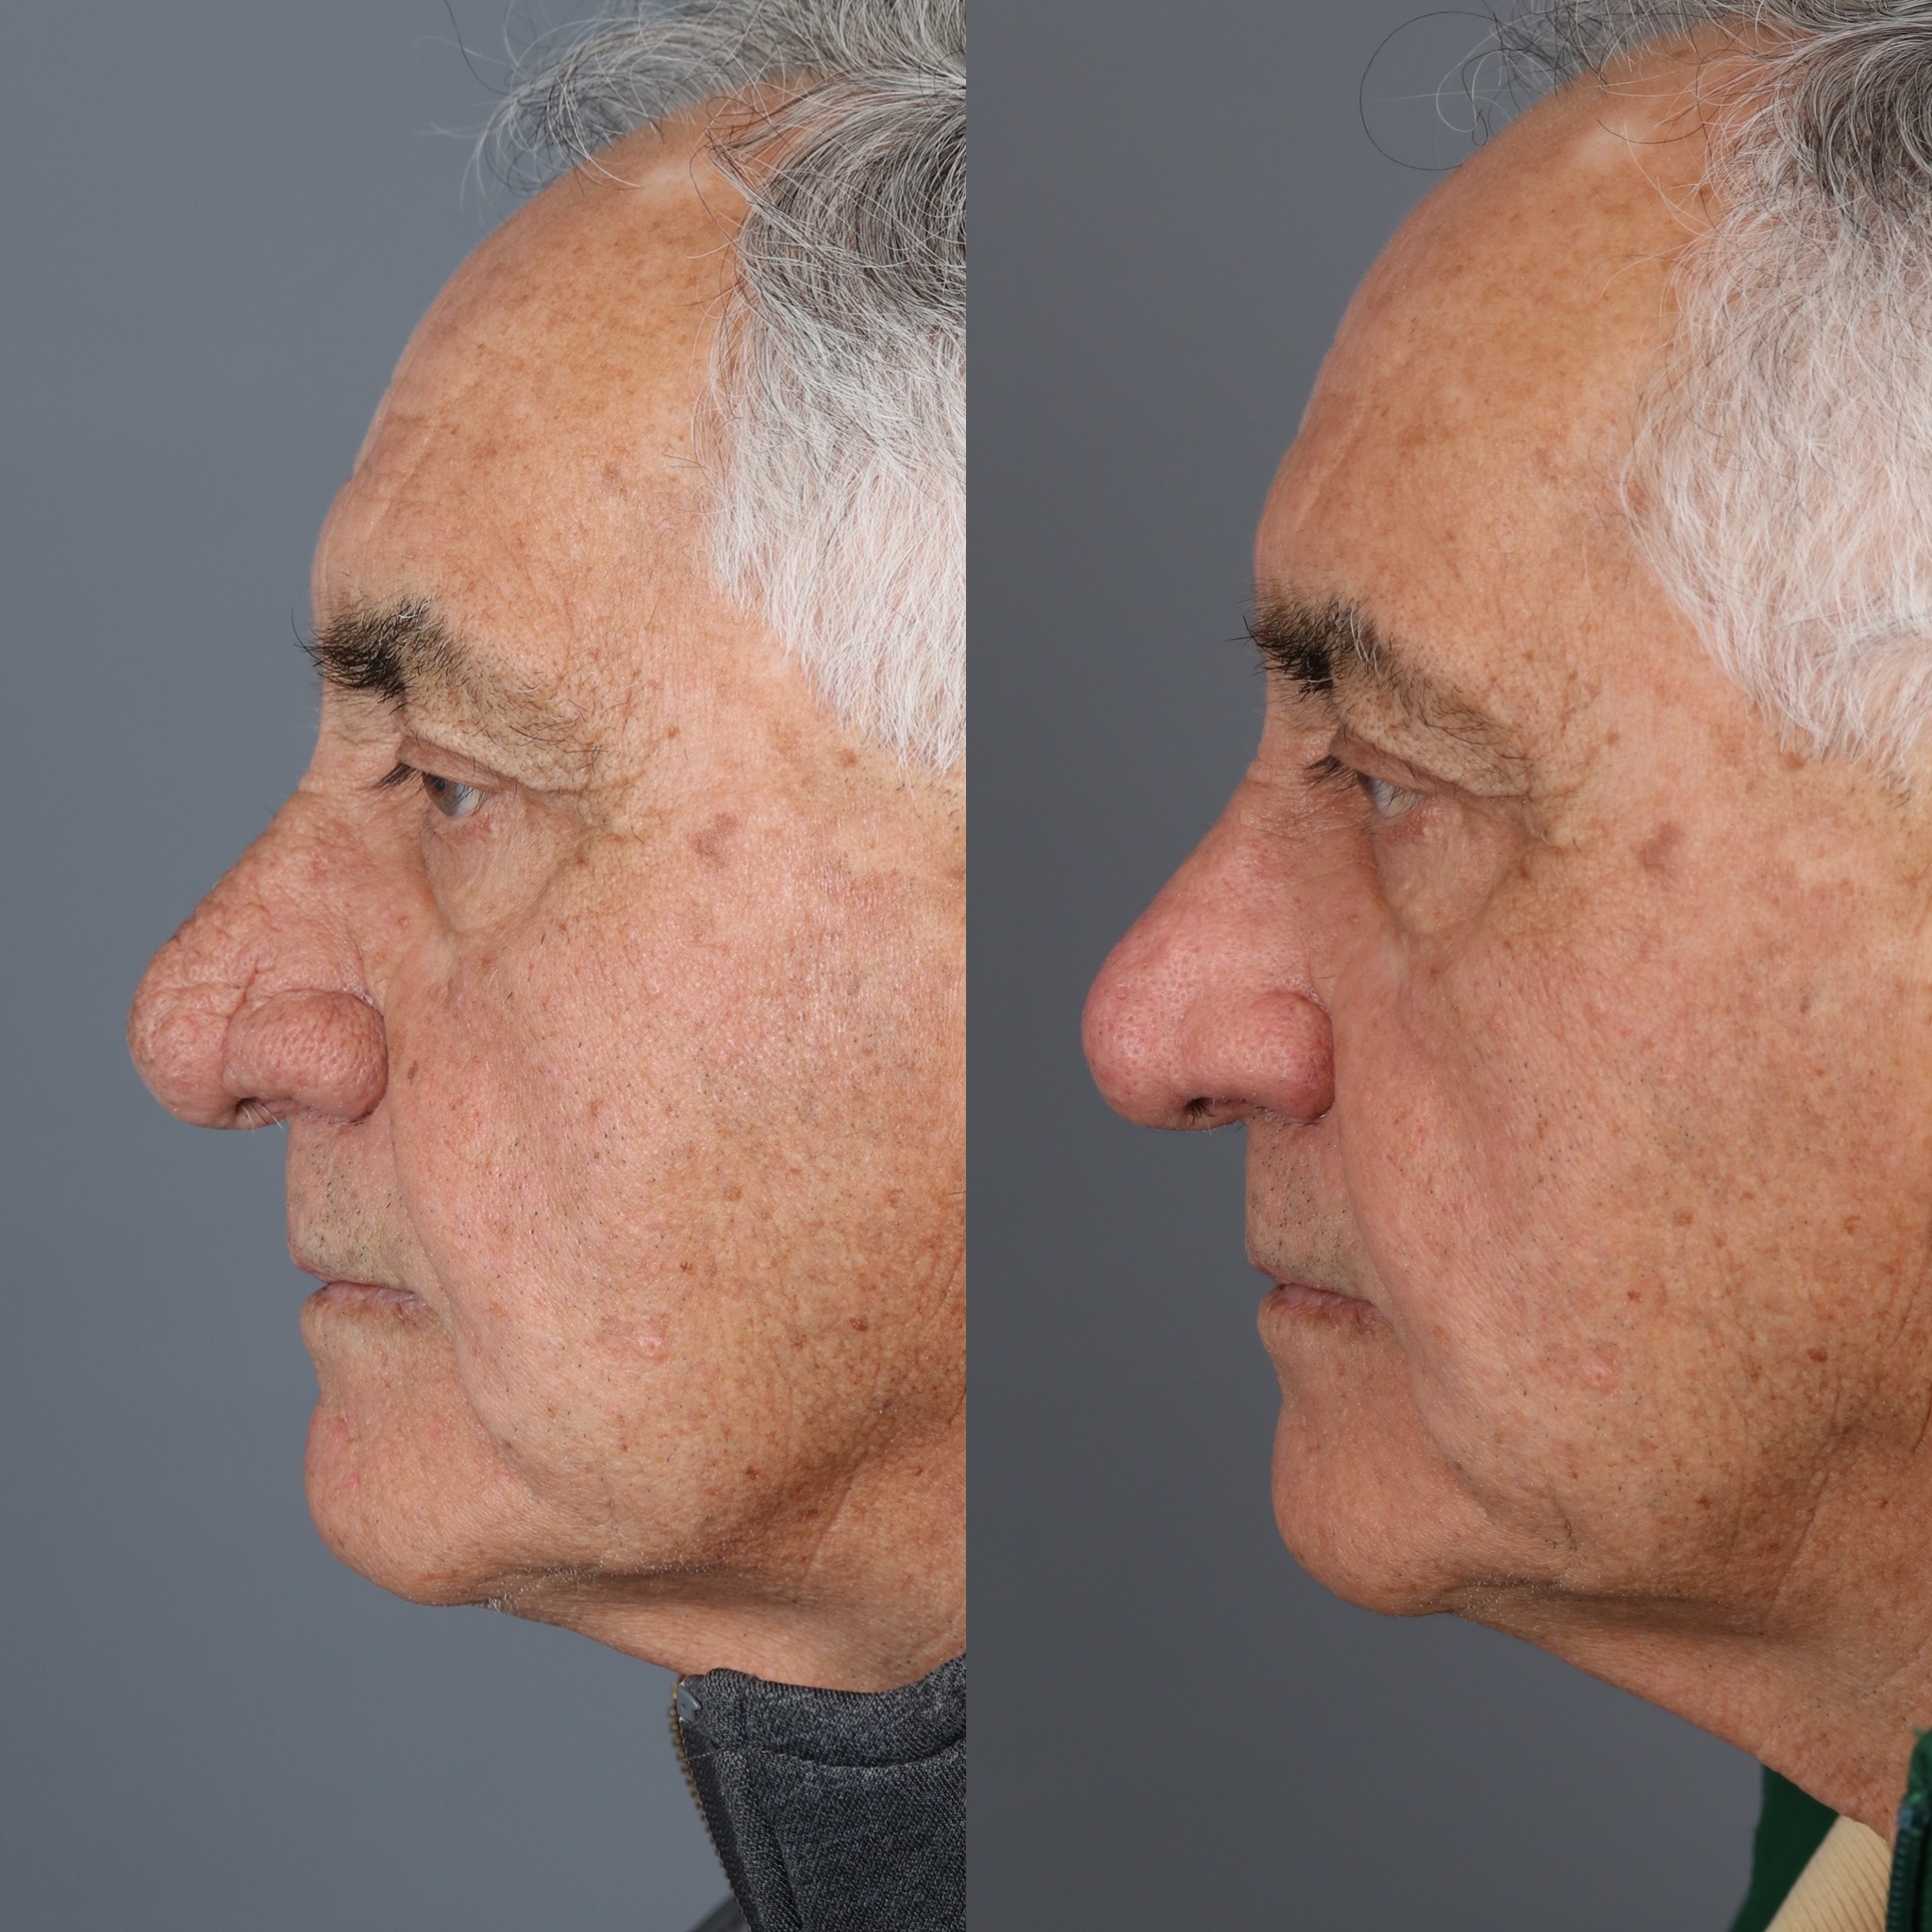 Vila Facial Plastic Surgery Blog | What is Rhinophyma?